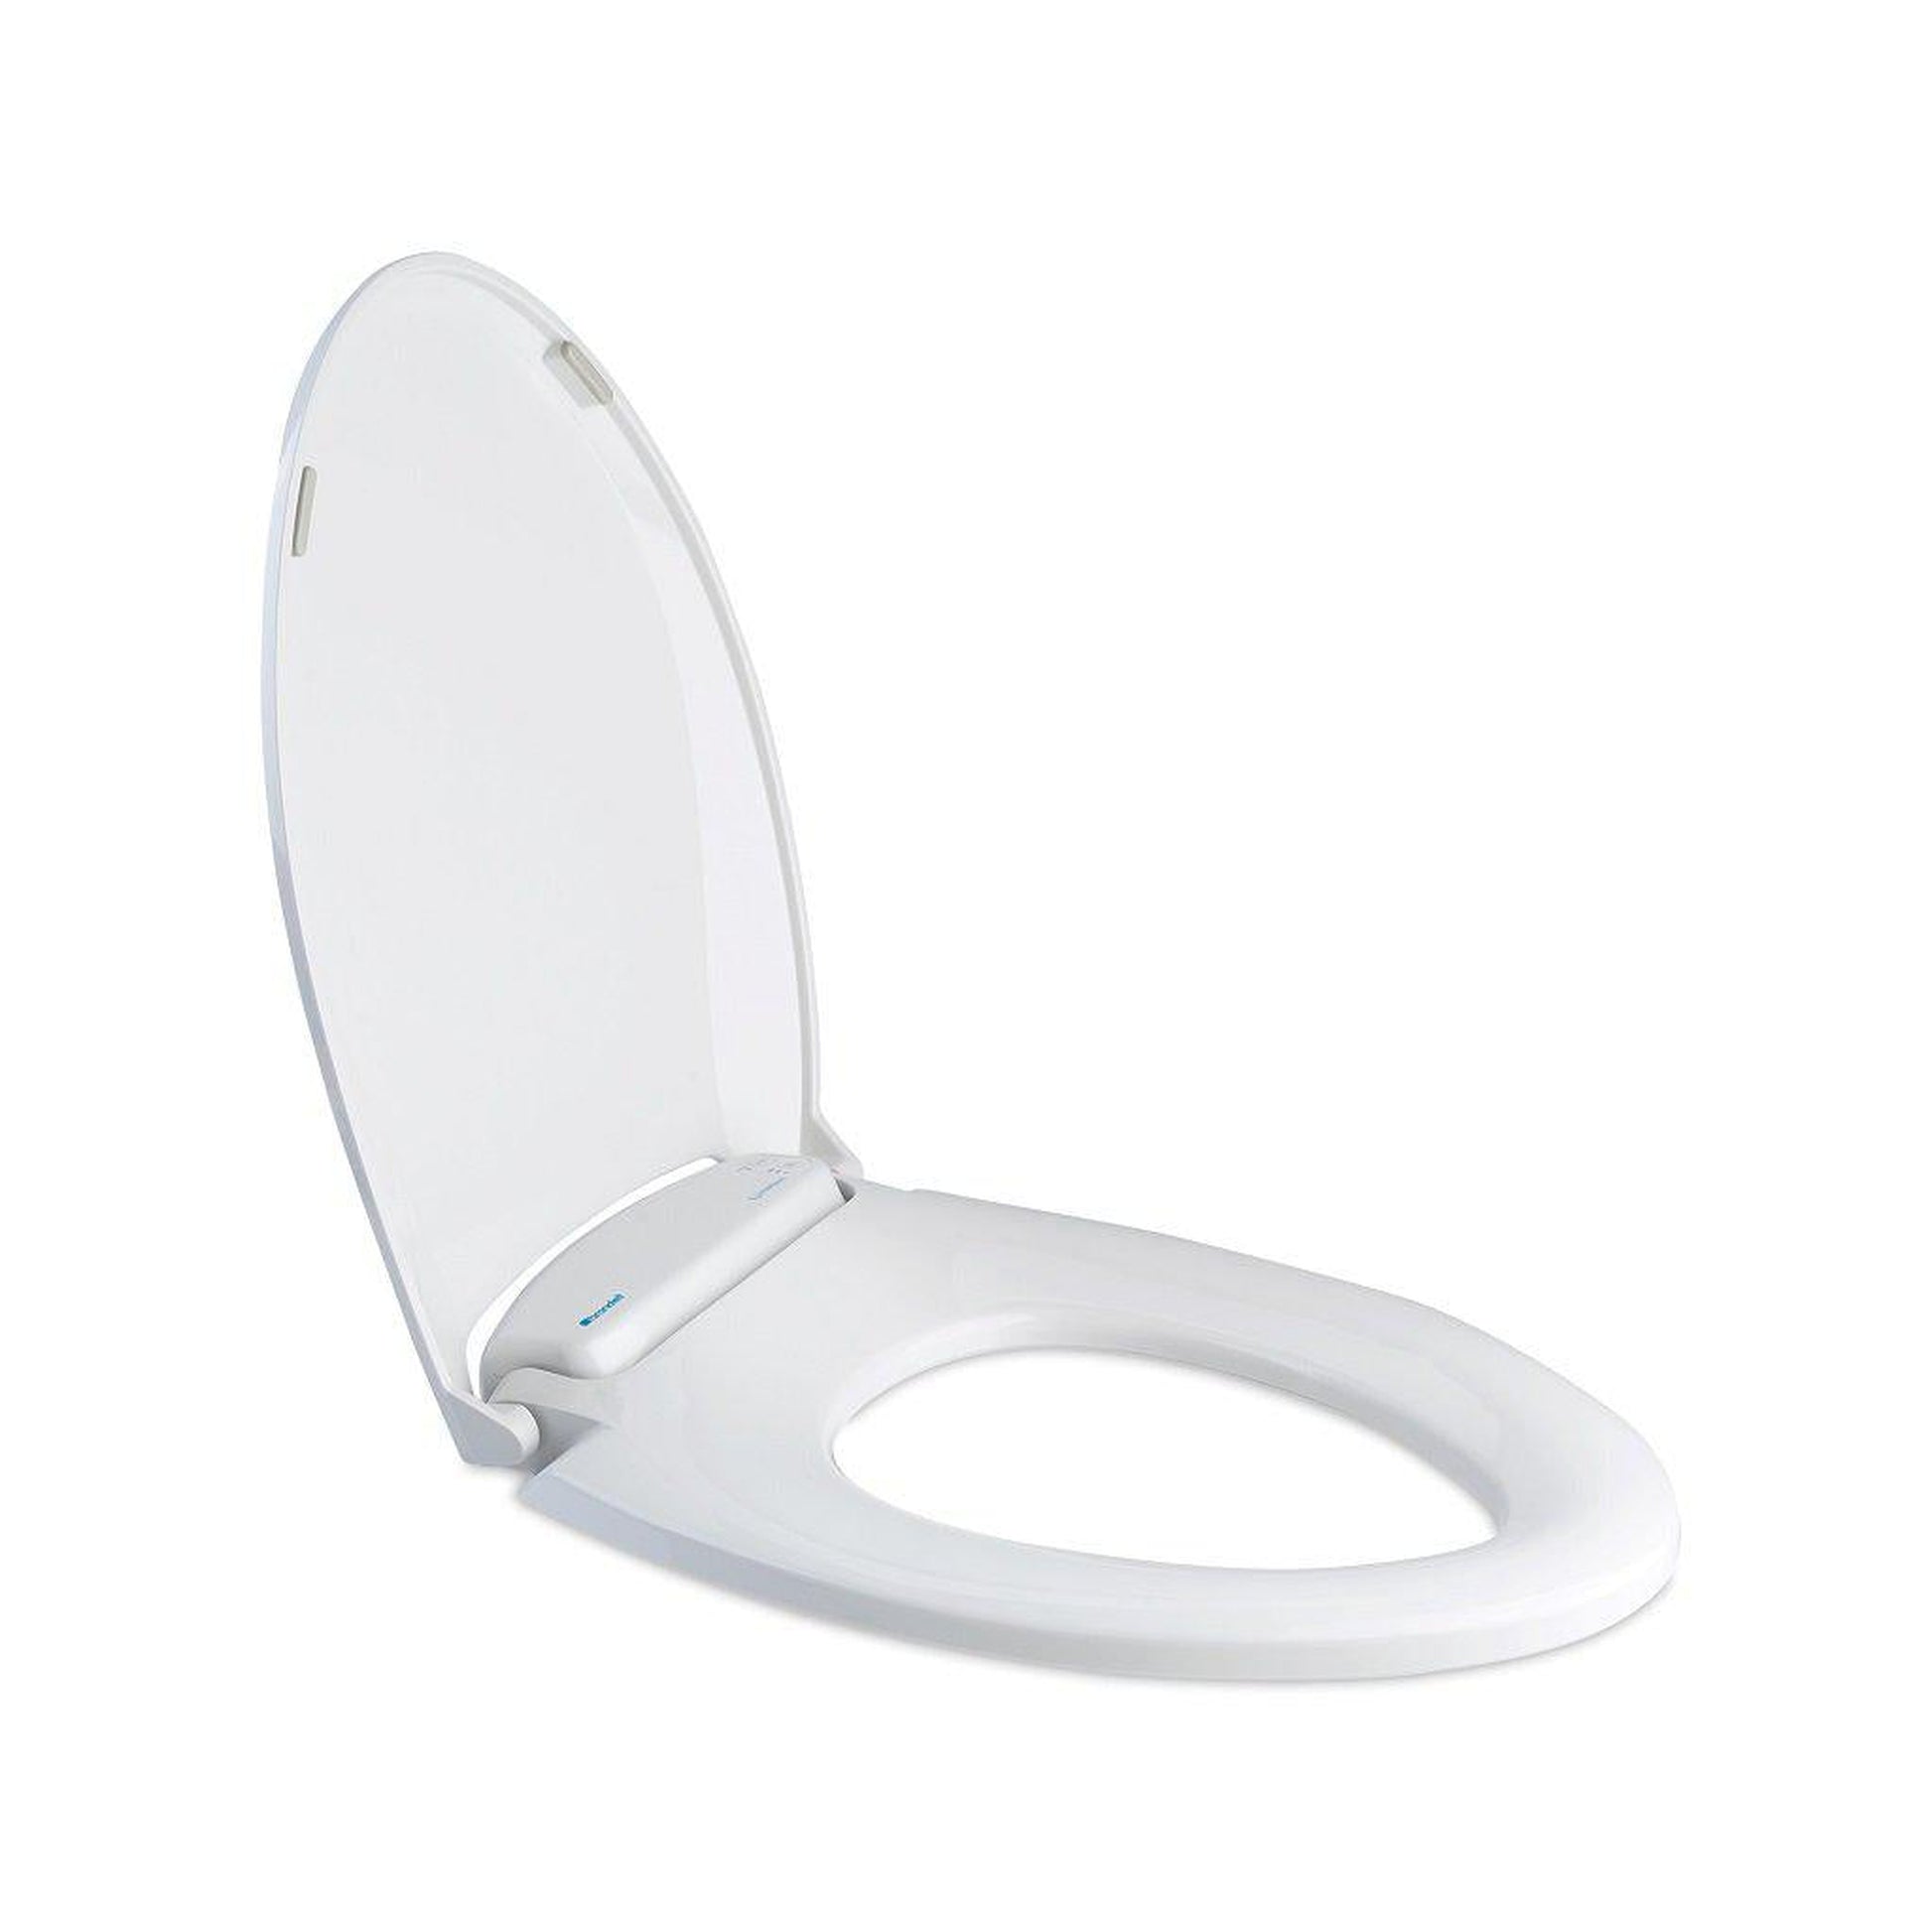 Brondell LumaWarm 20" White Elongated Electric Heated Nightlight Luxury Toilet Seat